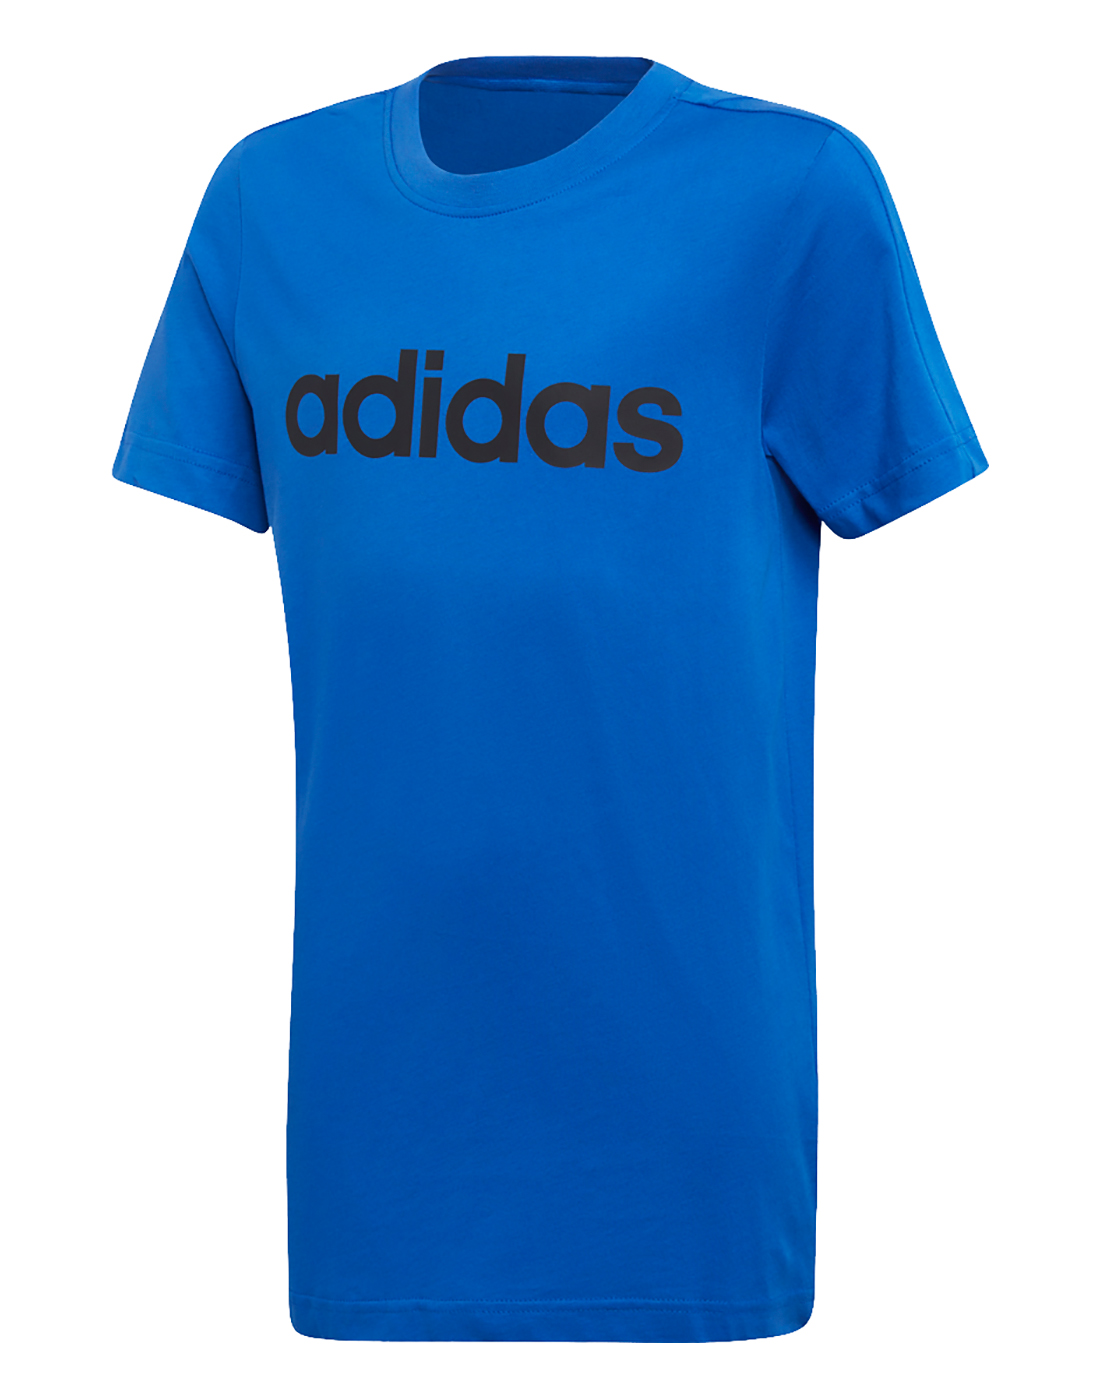 Boys adidas T-Shirt | Blue | Life Style Sports